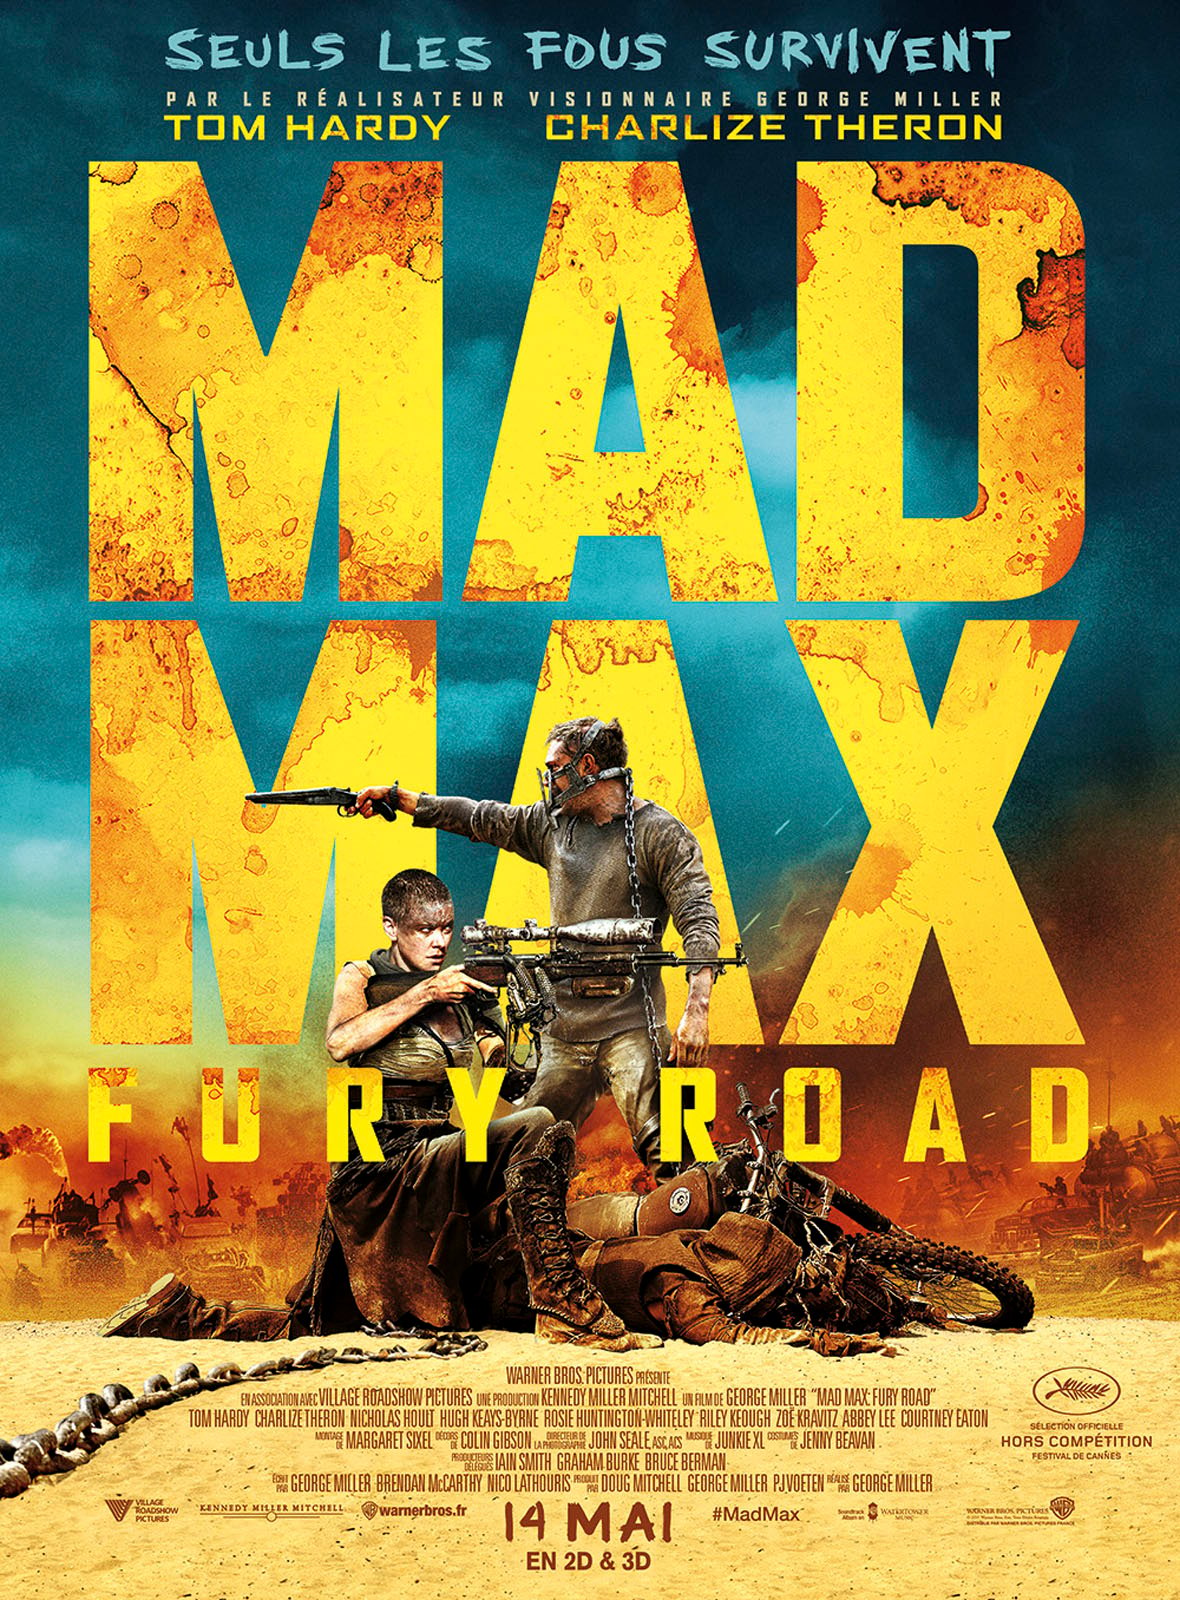 Coffret DVD Mad Max Anthologie 4 Films